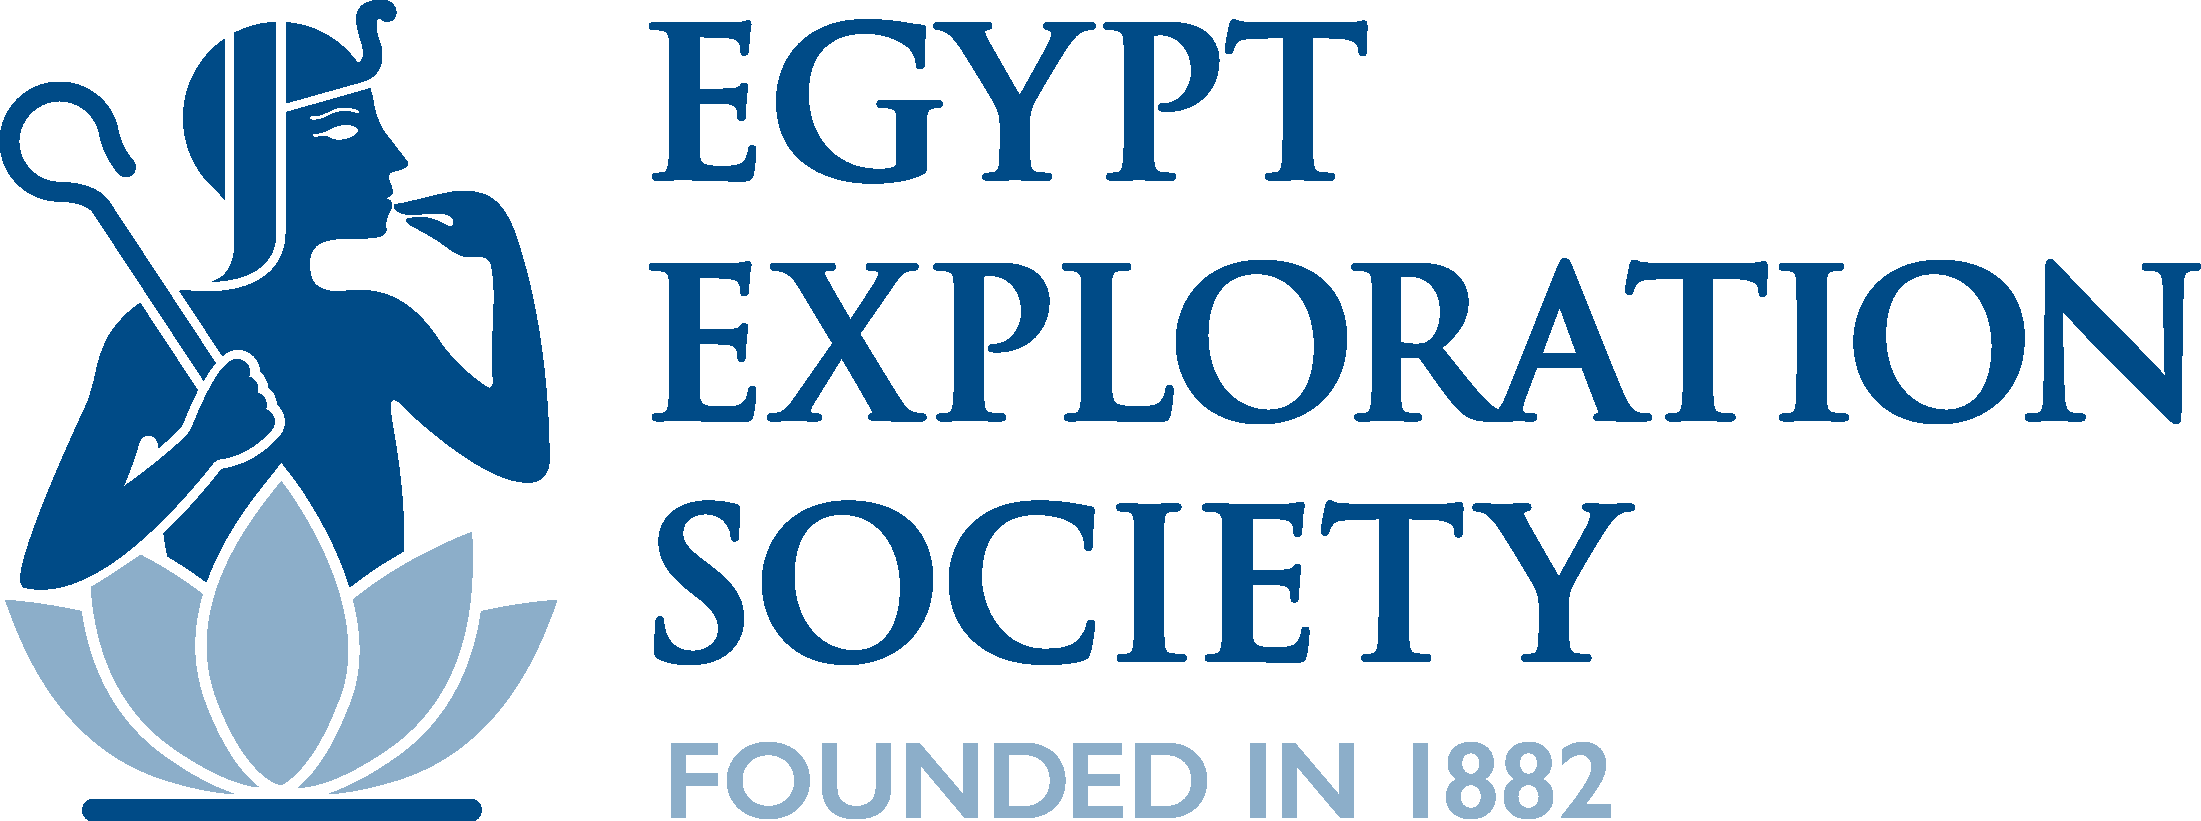 Egypt Exploration Society